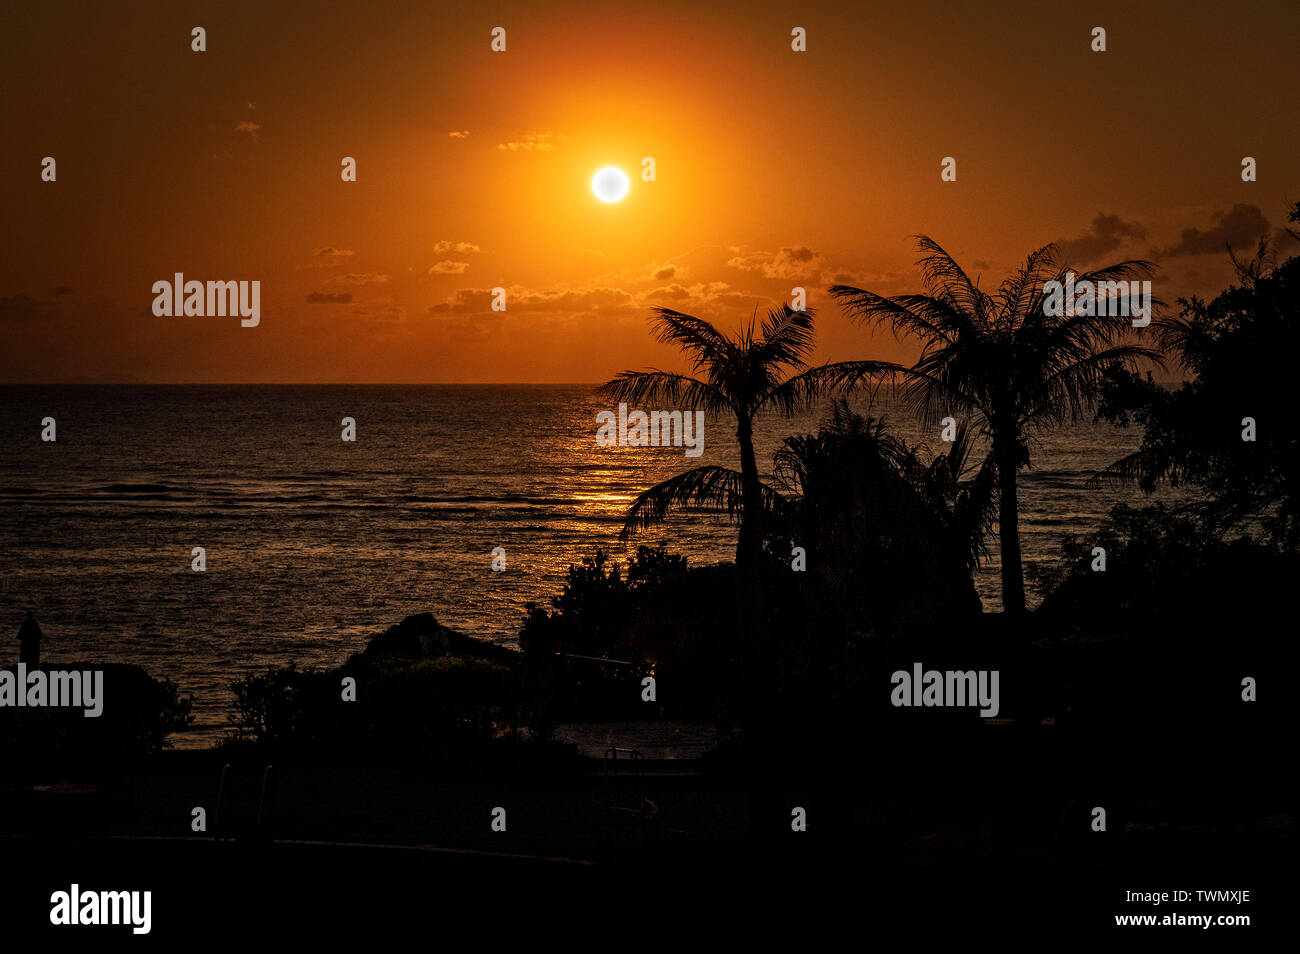 Beach scene with palm trees Stock Photo